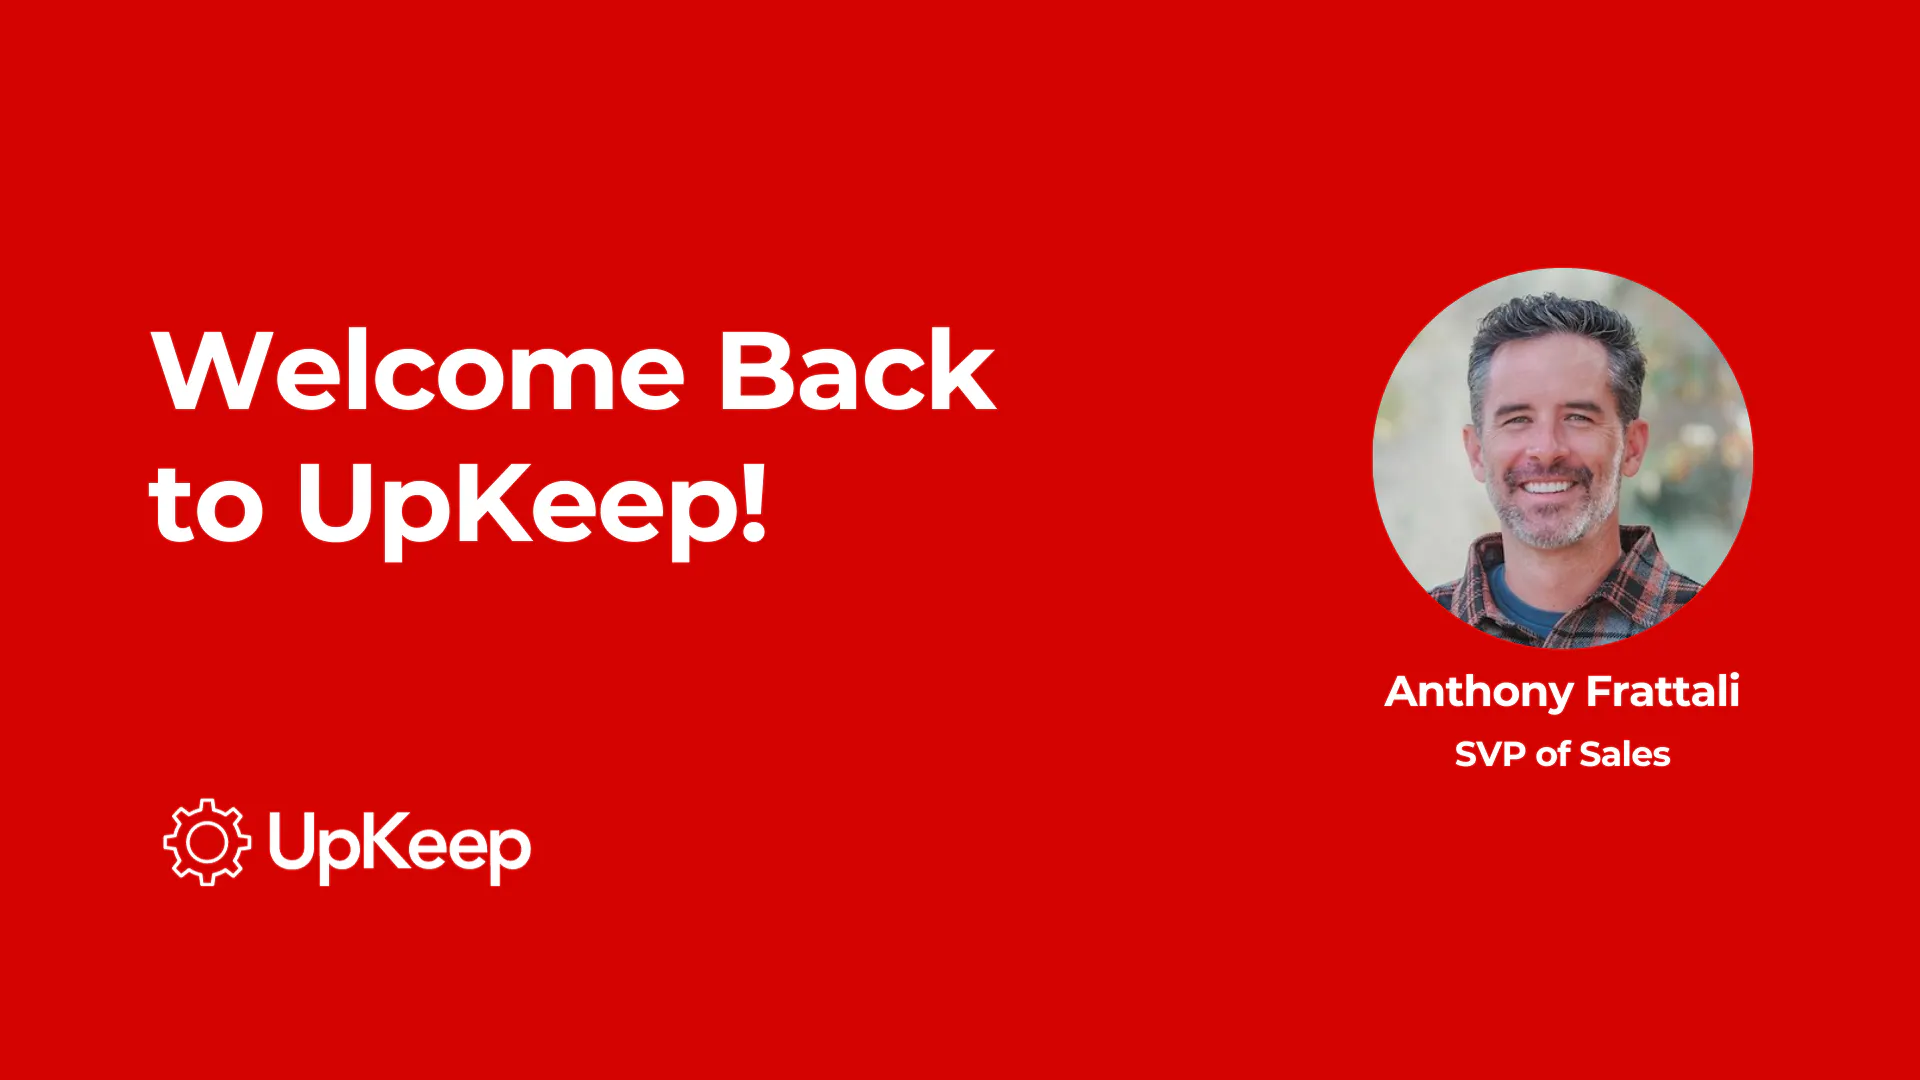 Welcoming Back UpKeep's New SVP of Sales: Anthony Frattali